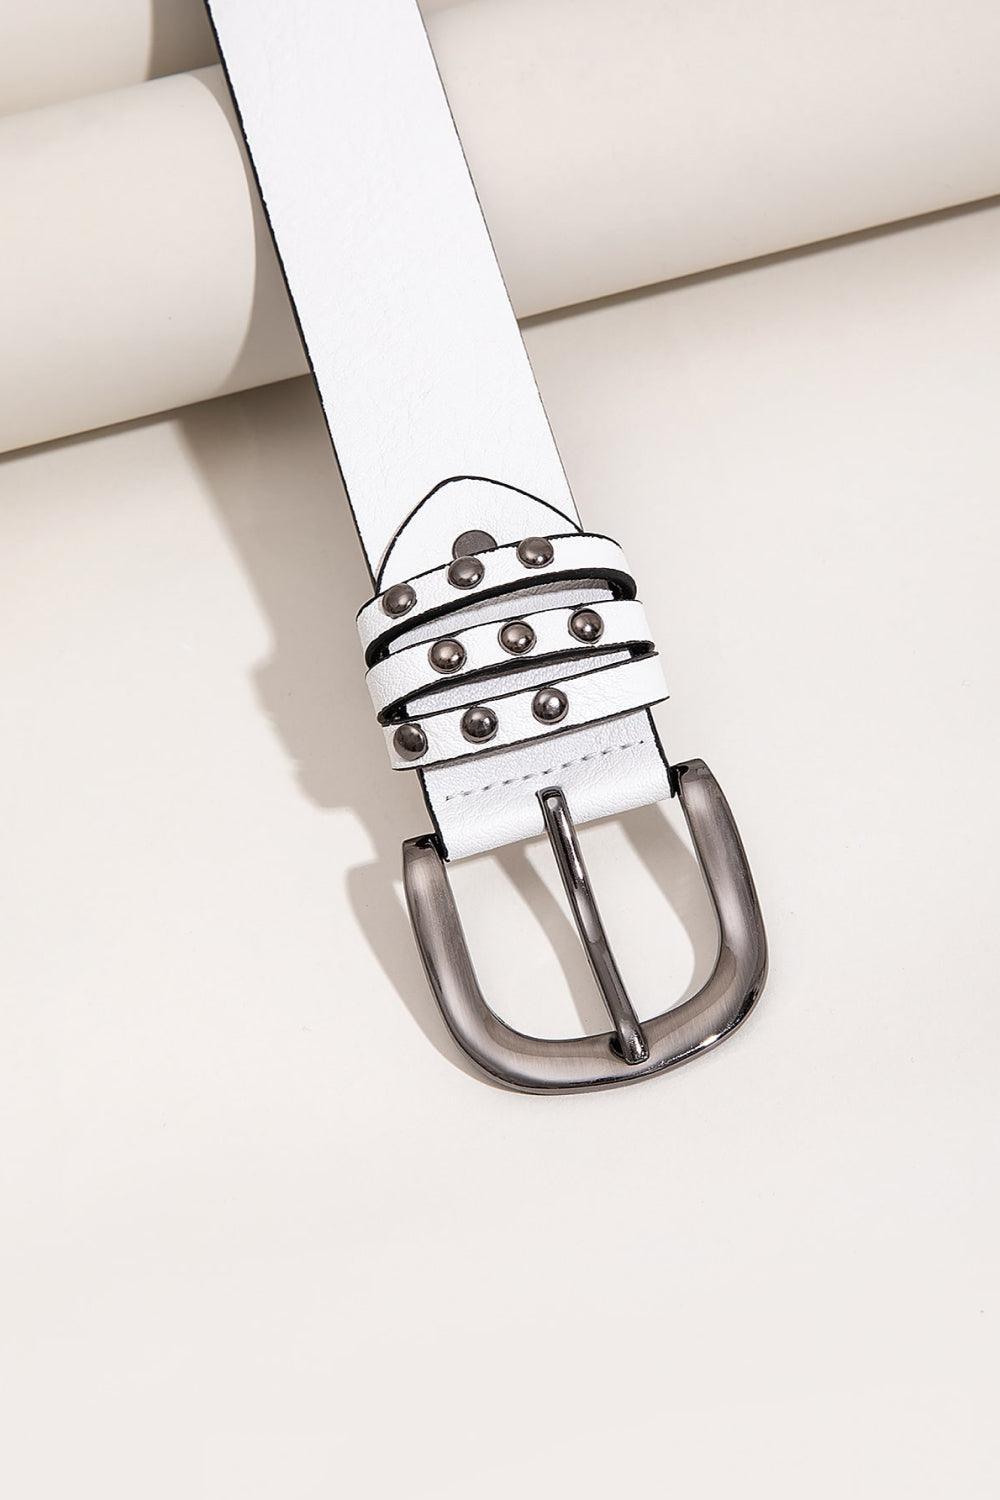 Convey Yourself PU Leather White Studded Belt - MXSTUDIO.COM